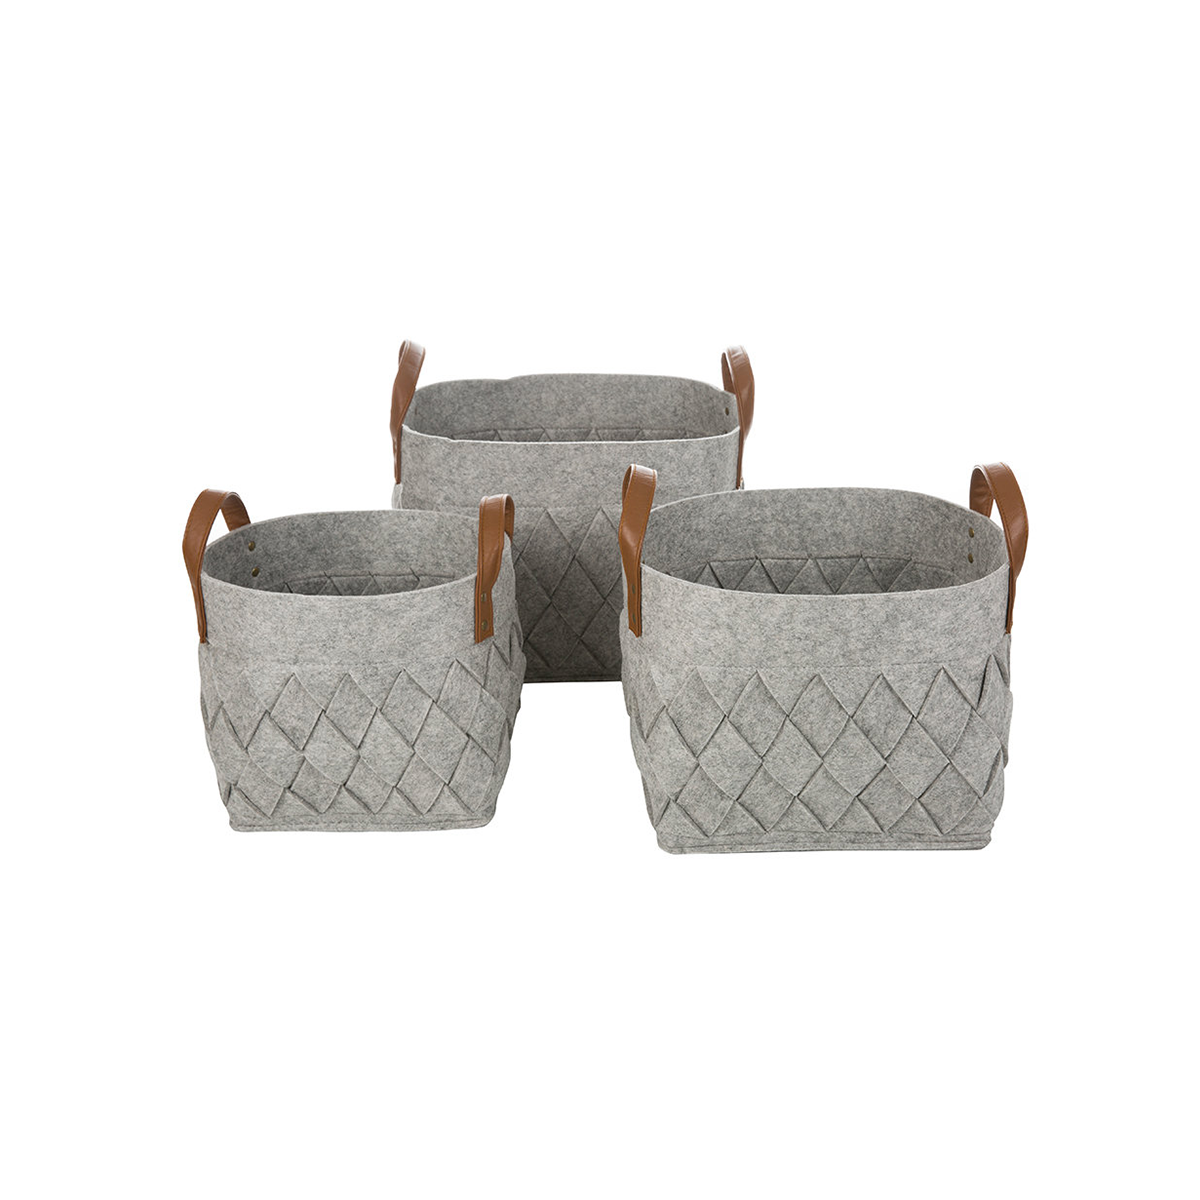 Grey felt baskets